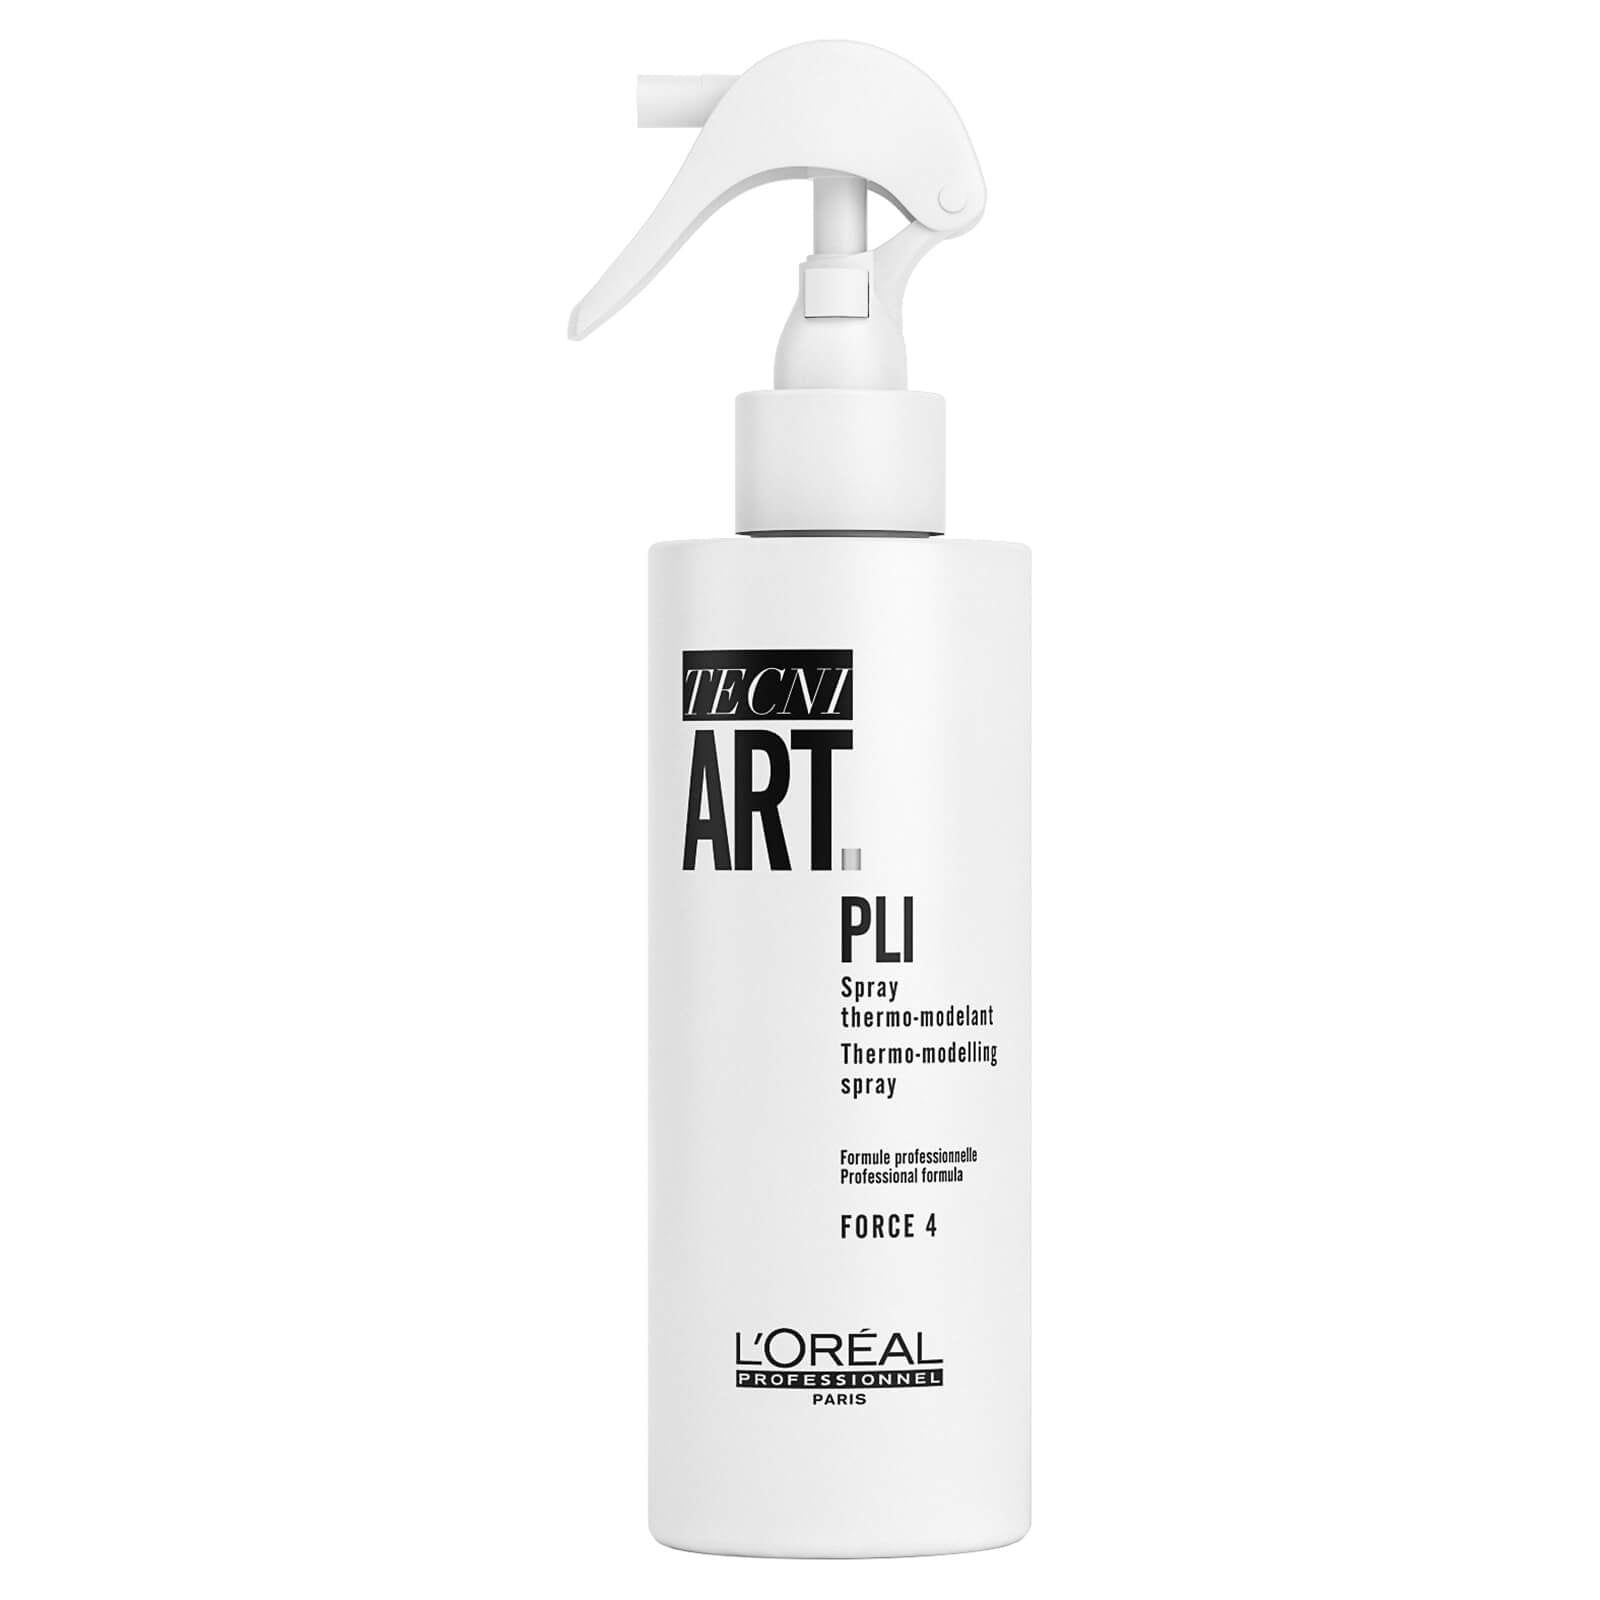 Loreal Tecni ART Spray Pli Thermo-Modelling Spray